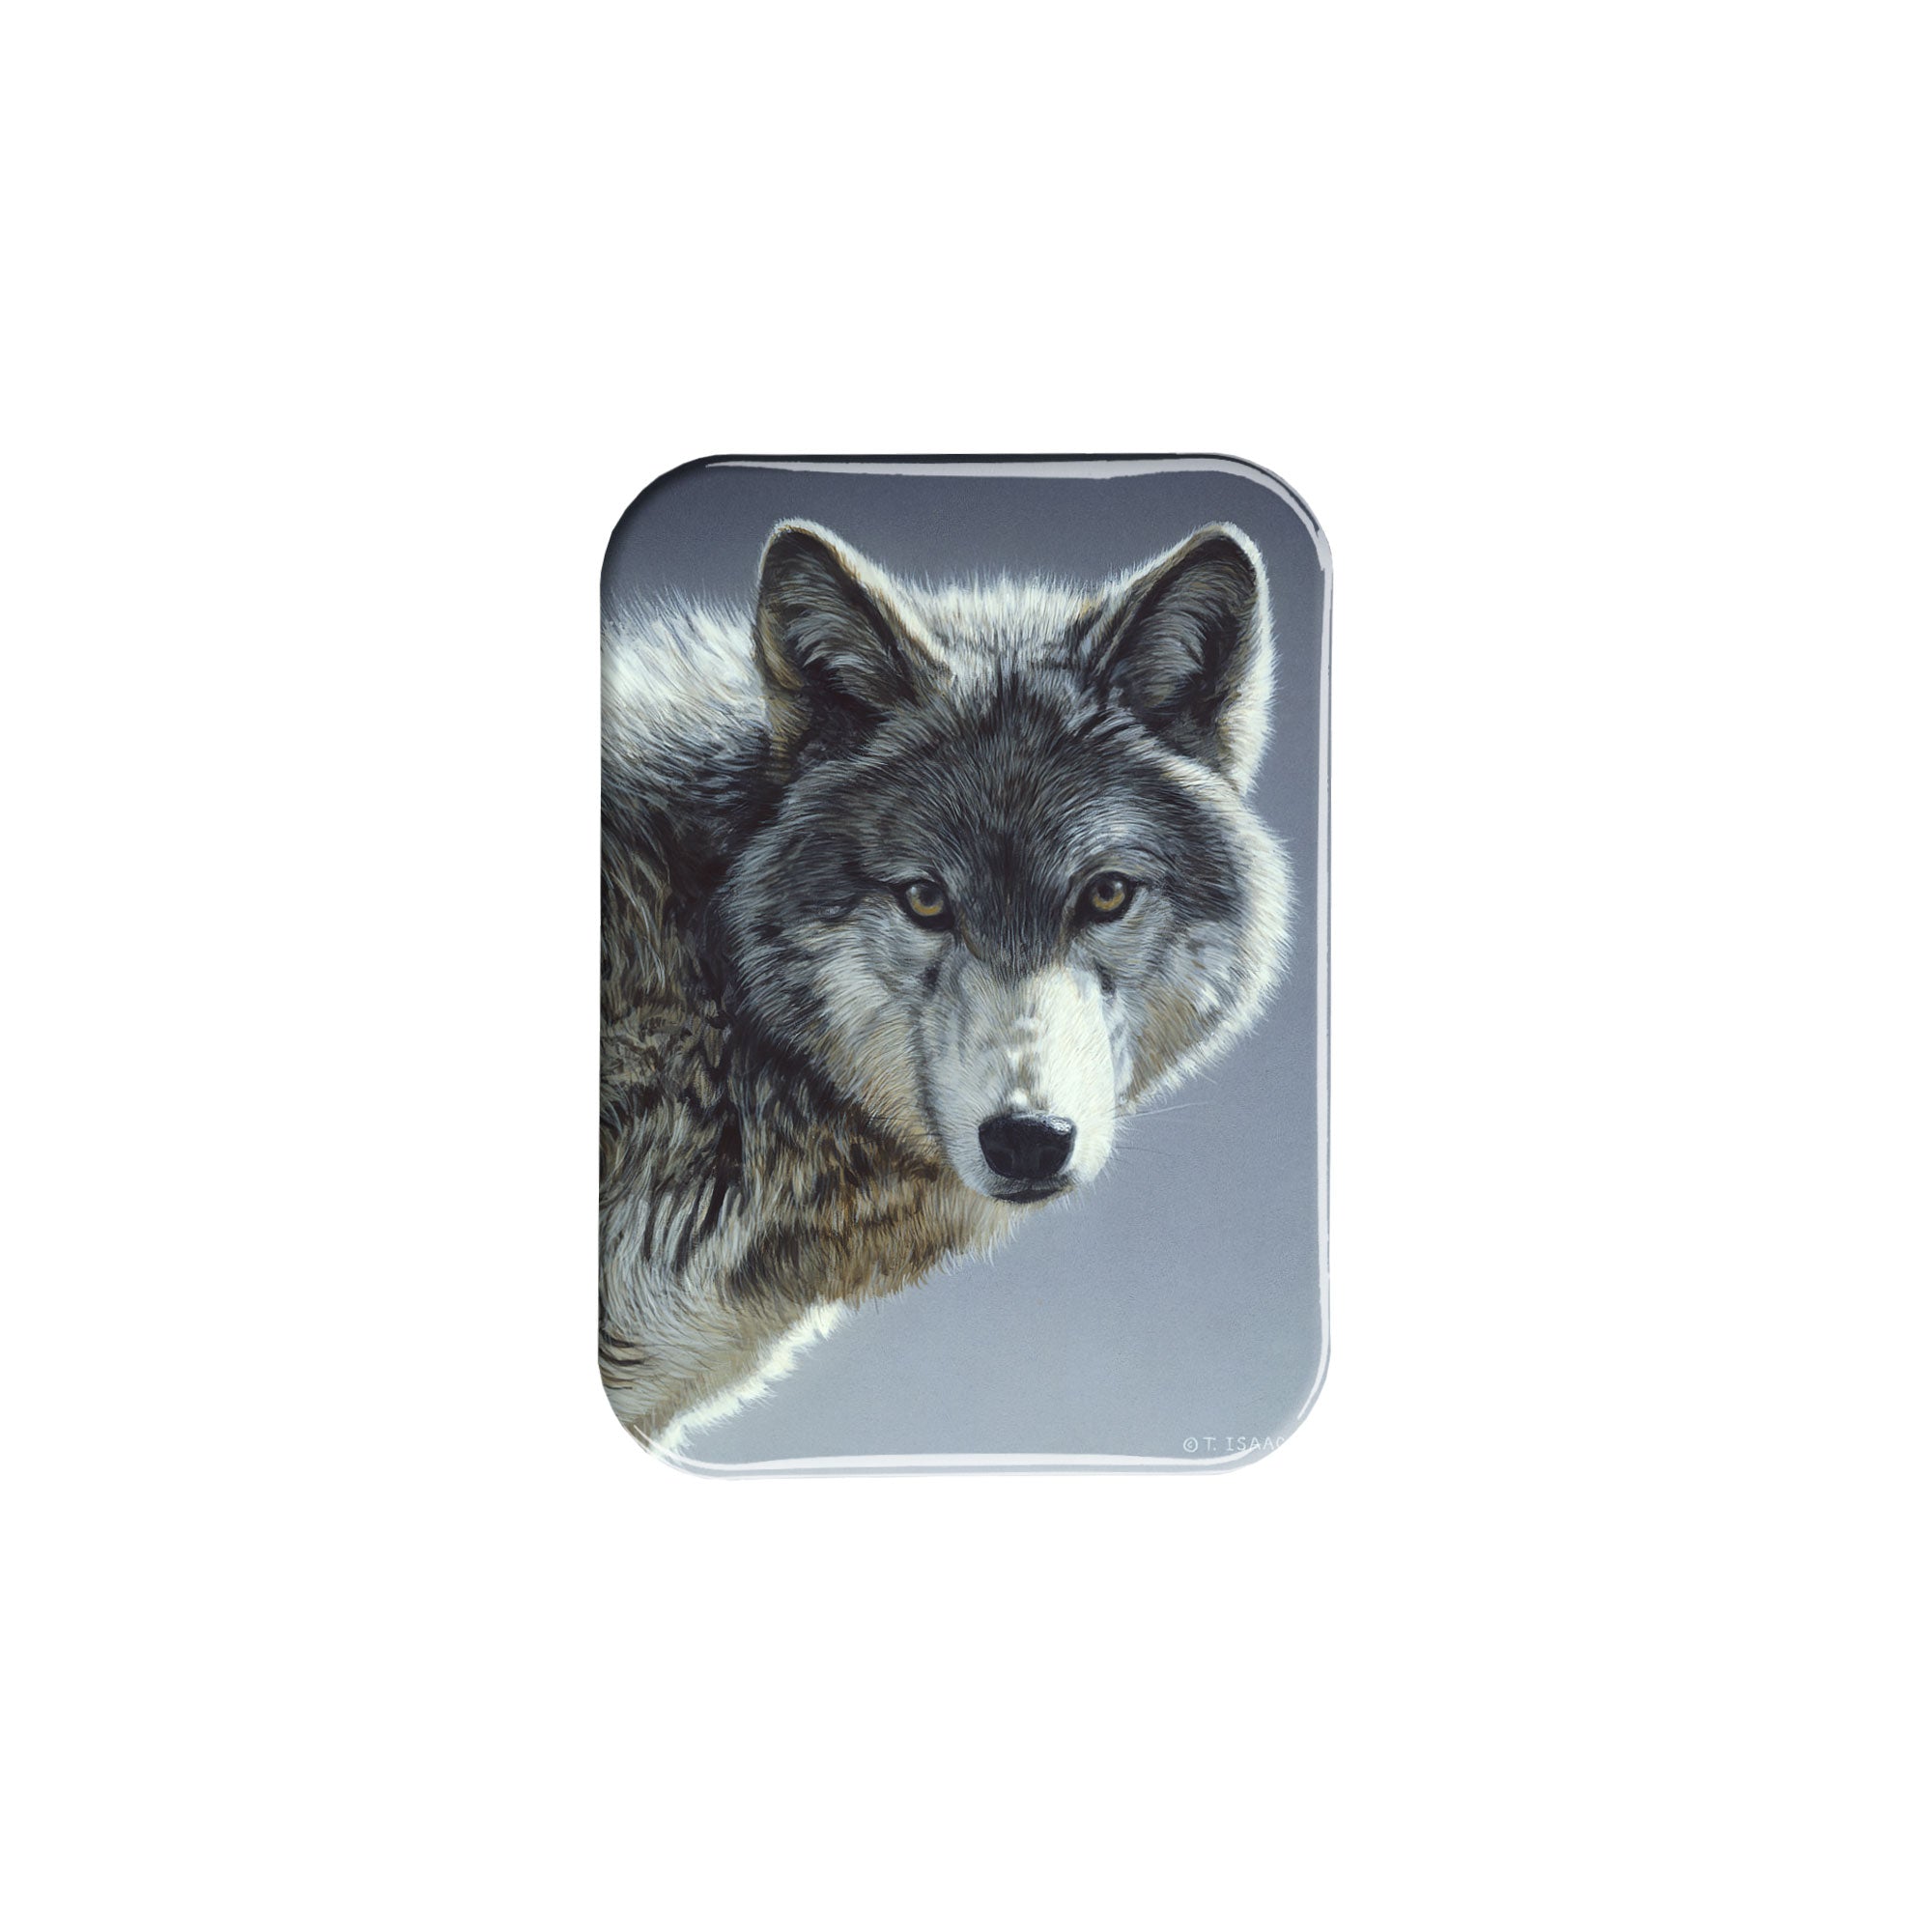 "Wolf" - 2.5" X 3.5" Rectangle Fridge Magnets